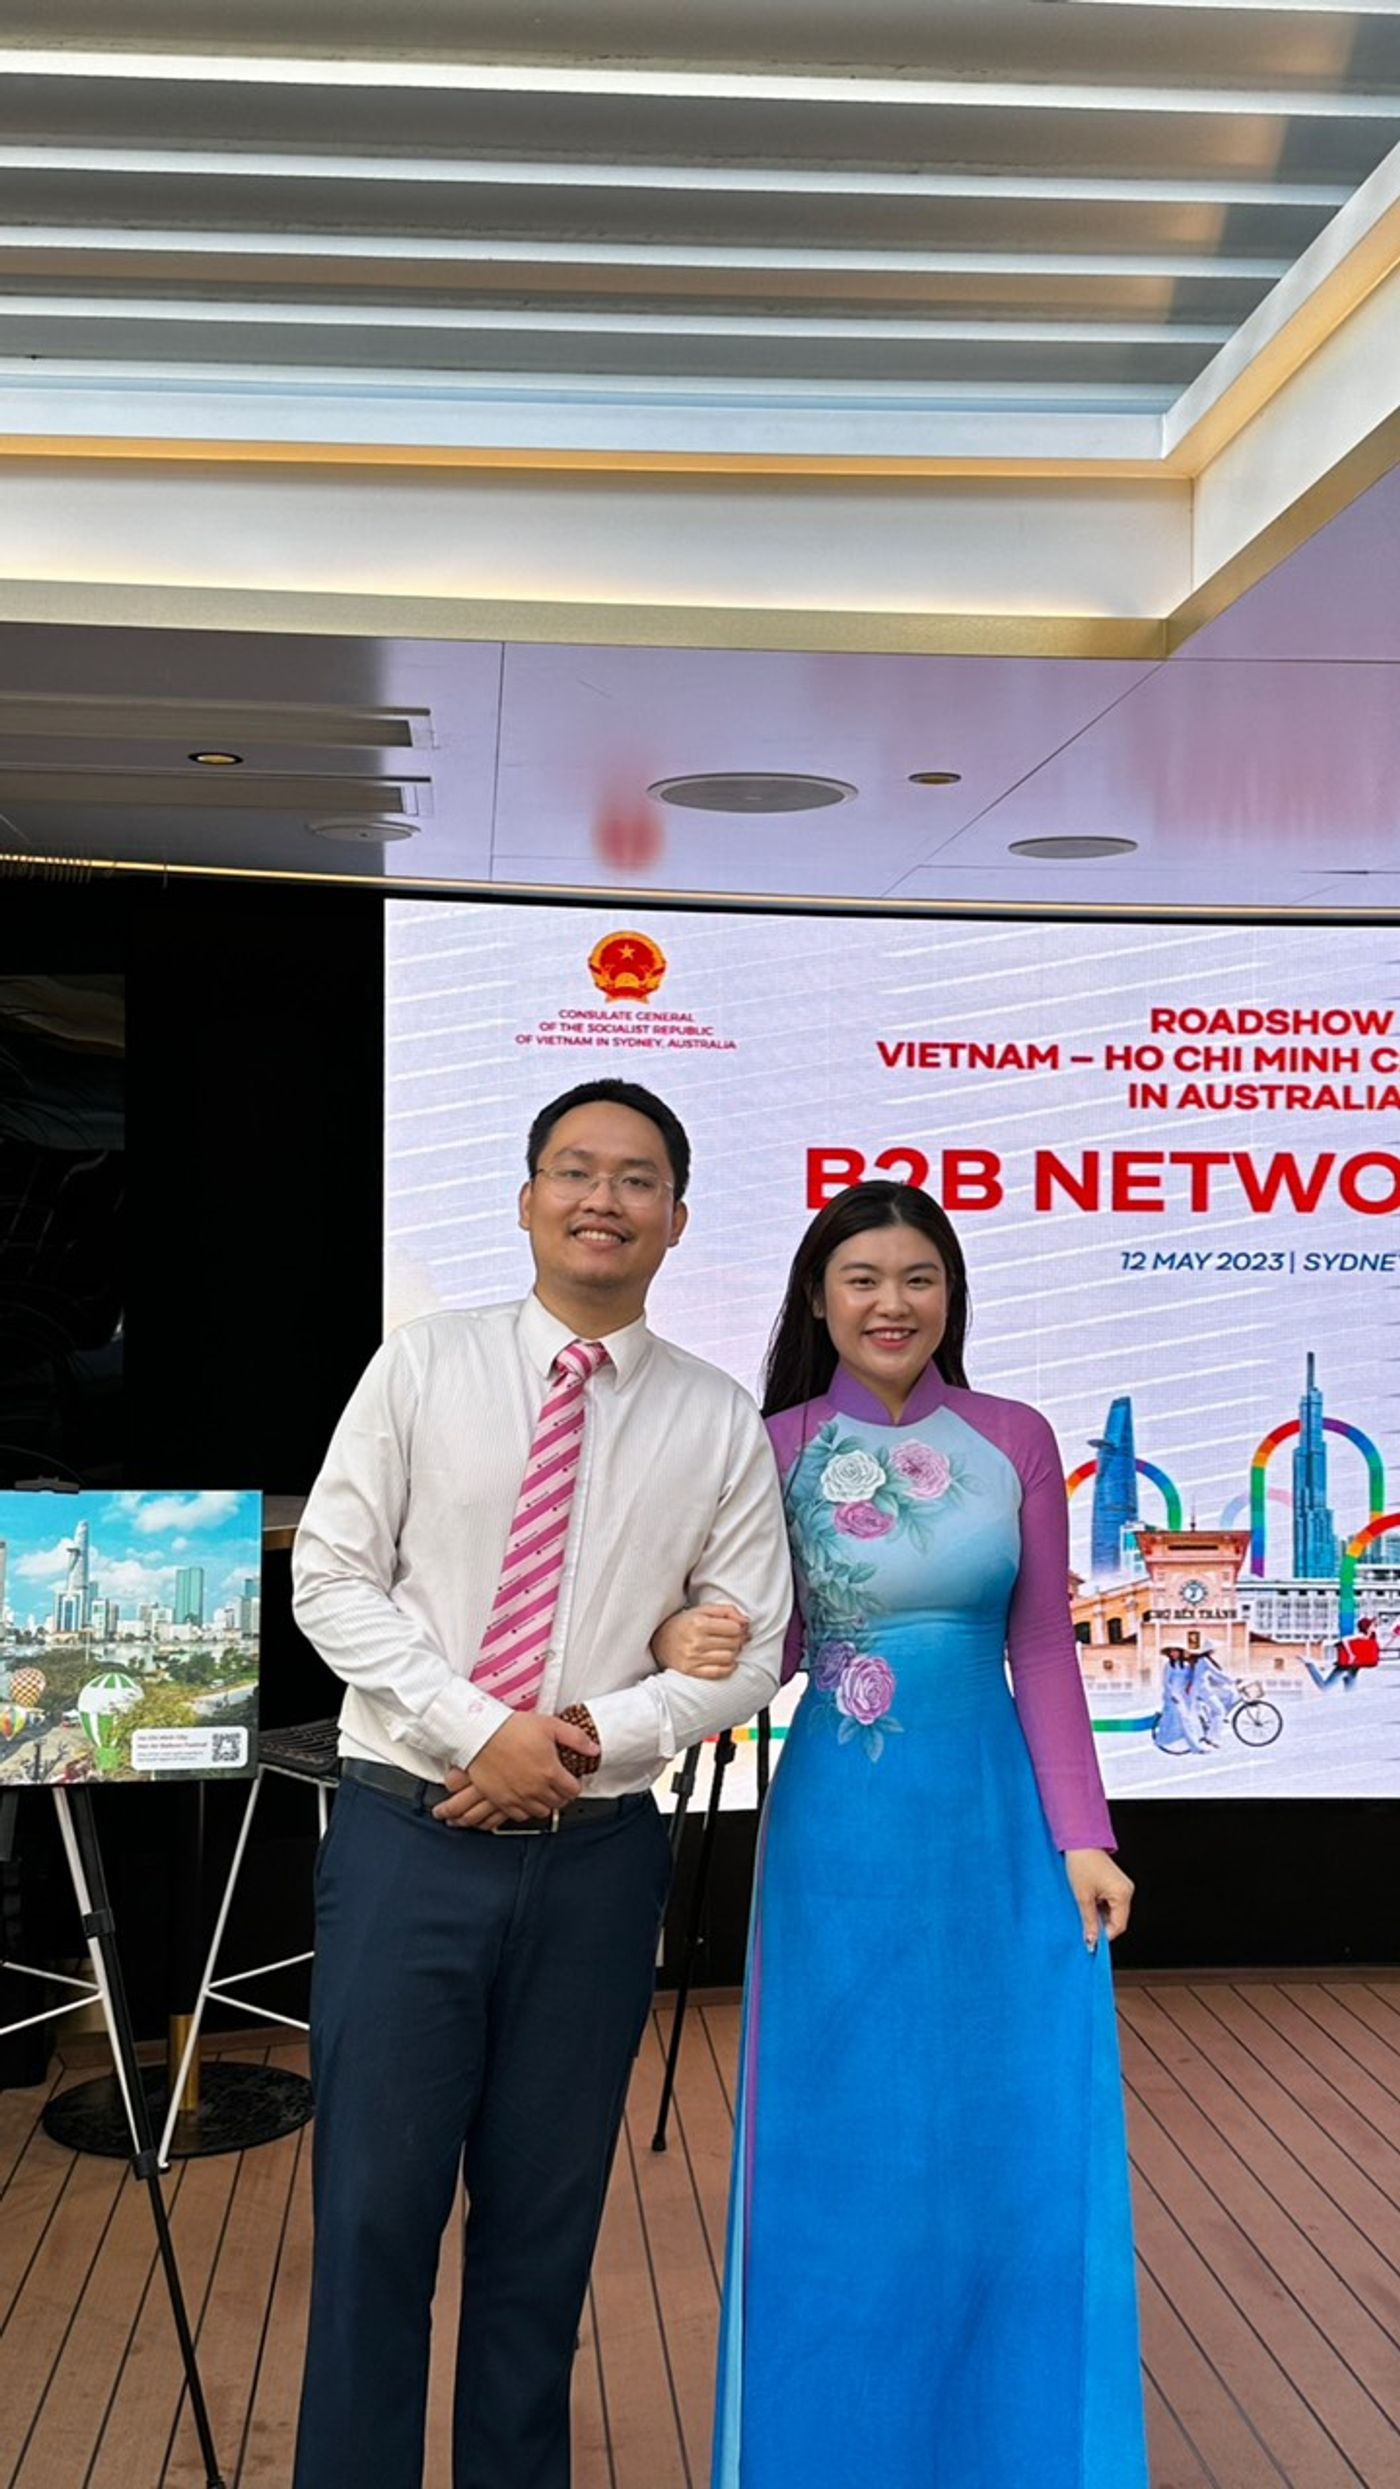 A Representative from Vietravel - Vietnam's Largest Aviation and Tourism Corporation